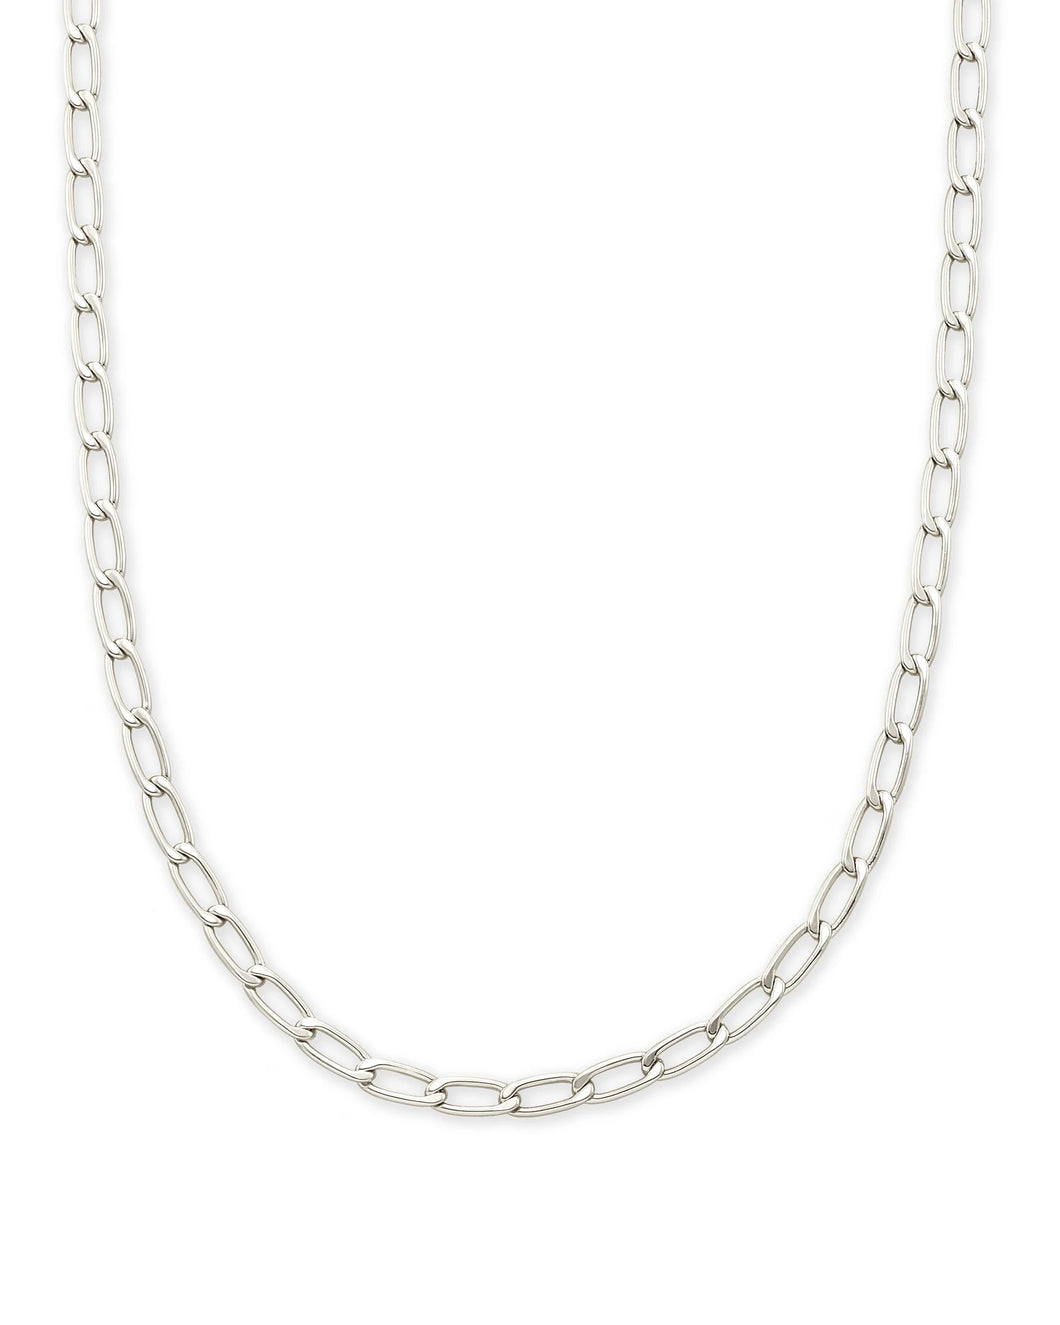 KS Merrick Chain Necklace